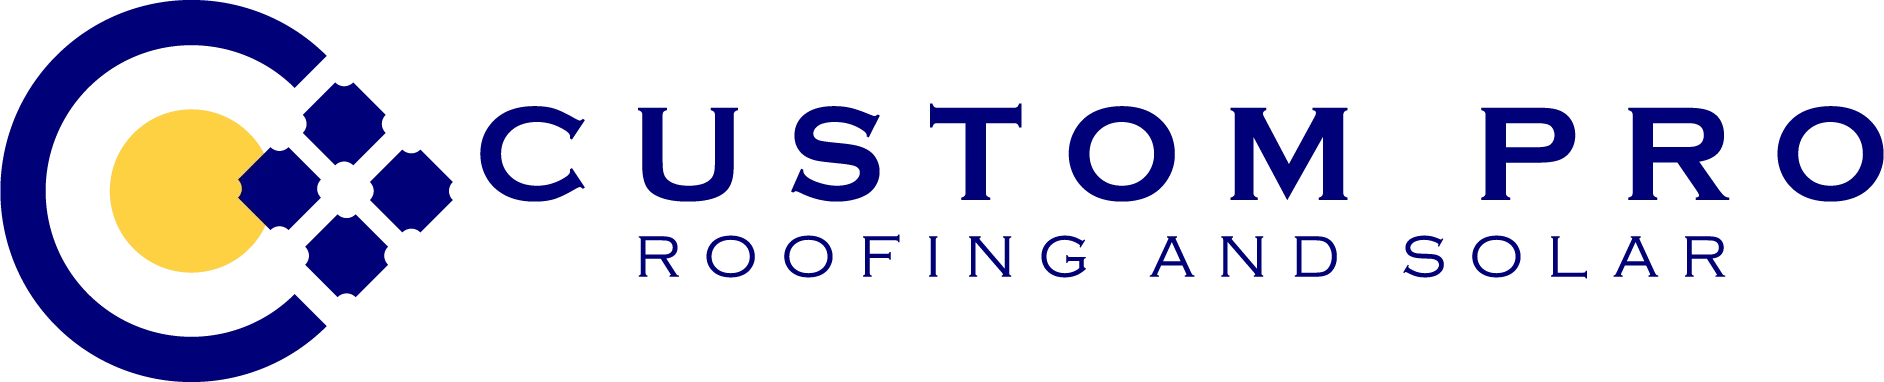 Custom Pro Roofing and Solar logo